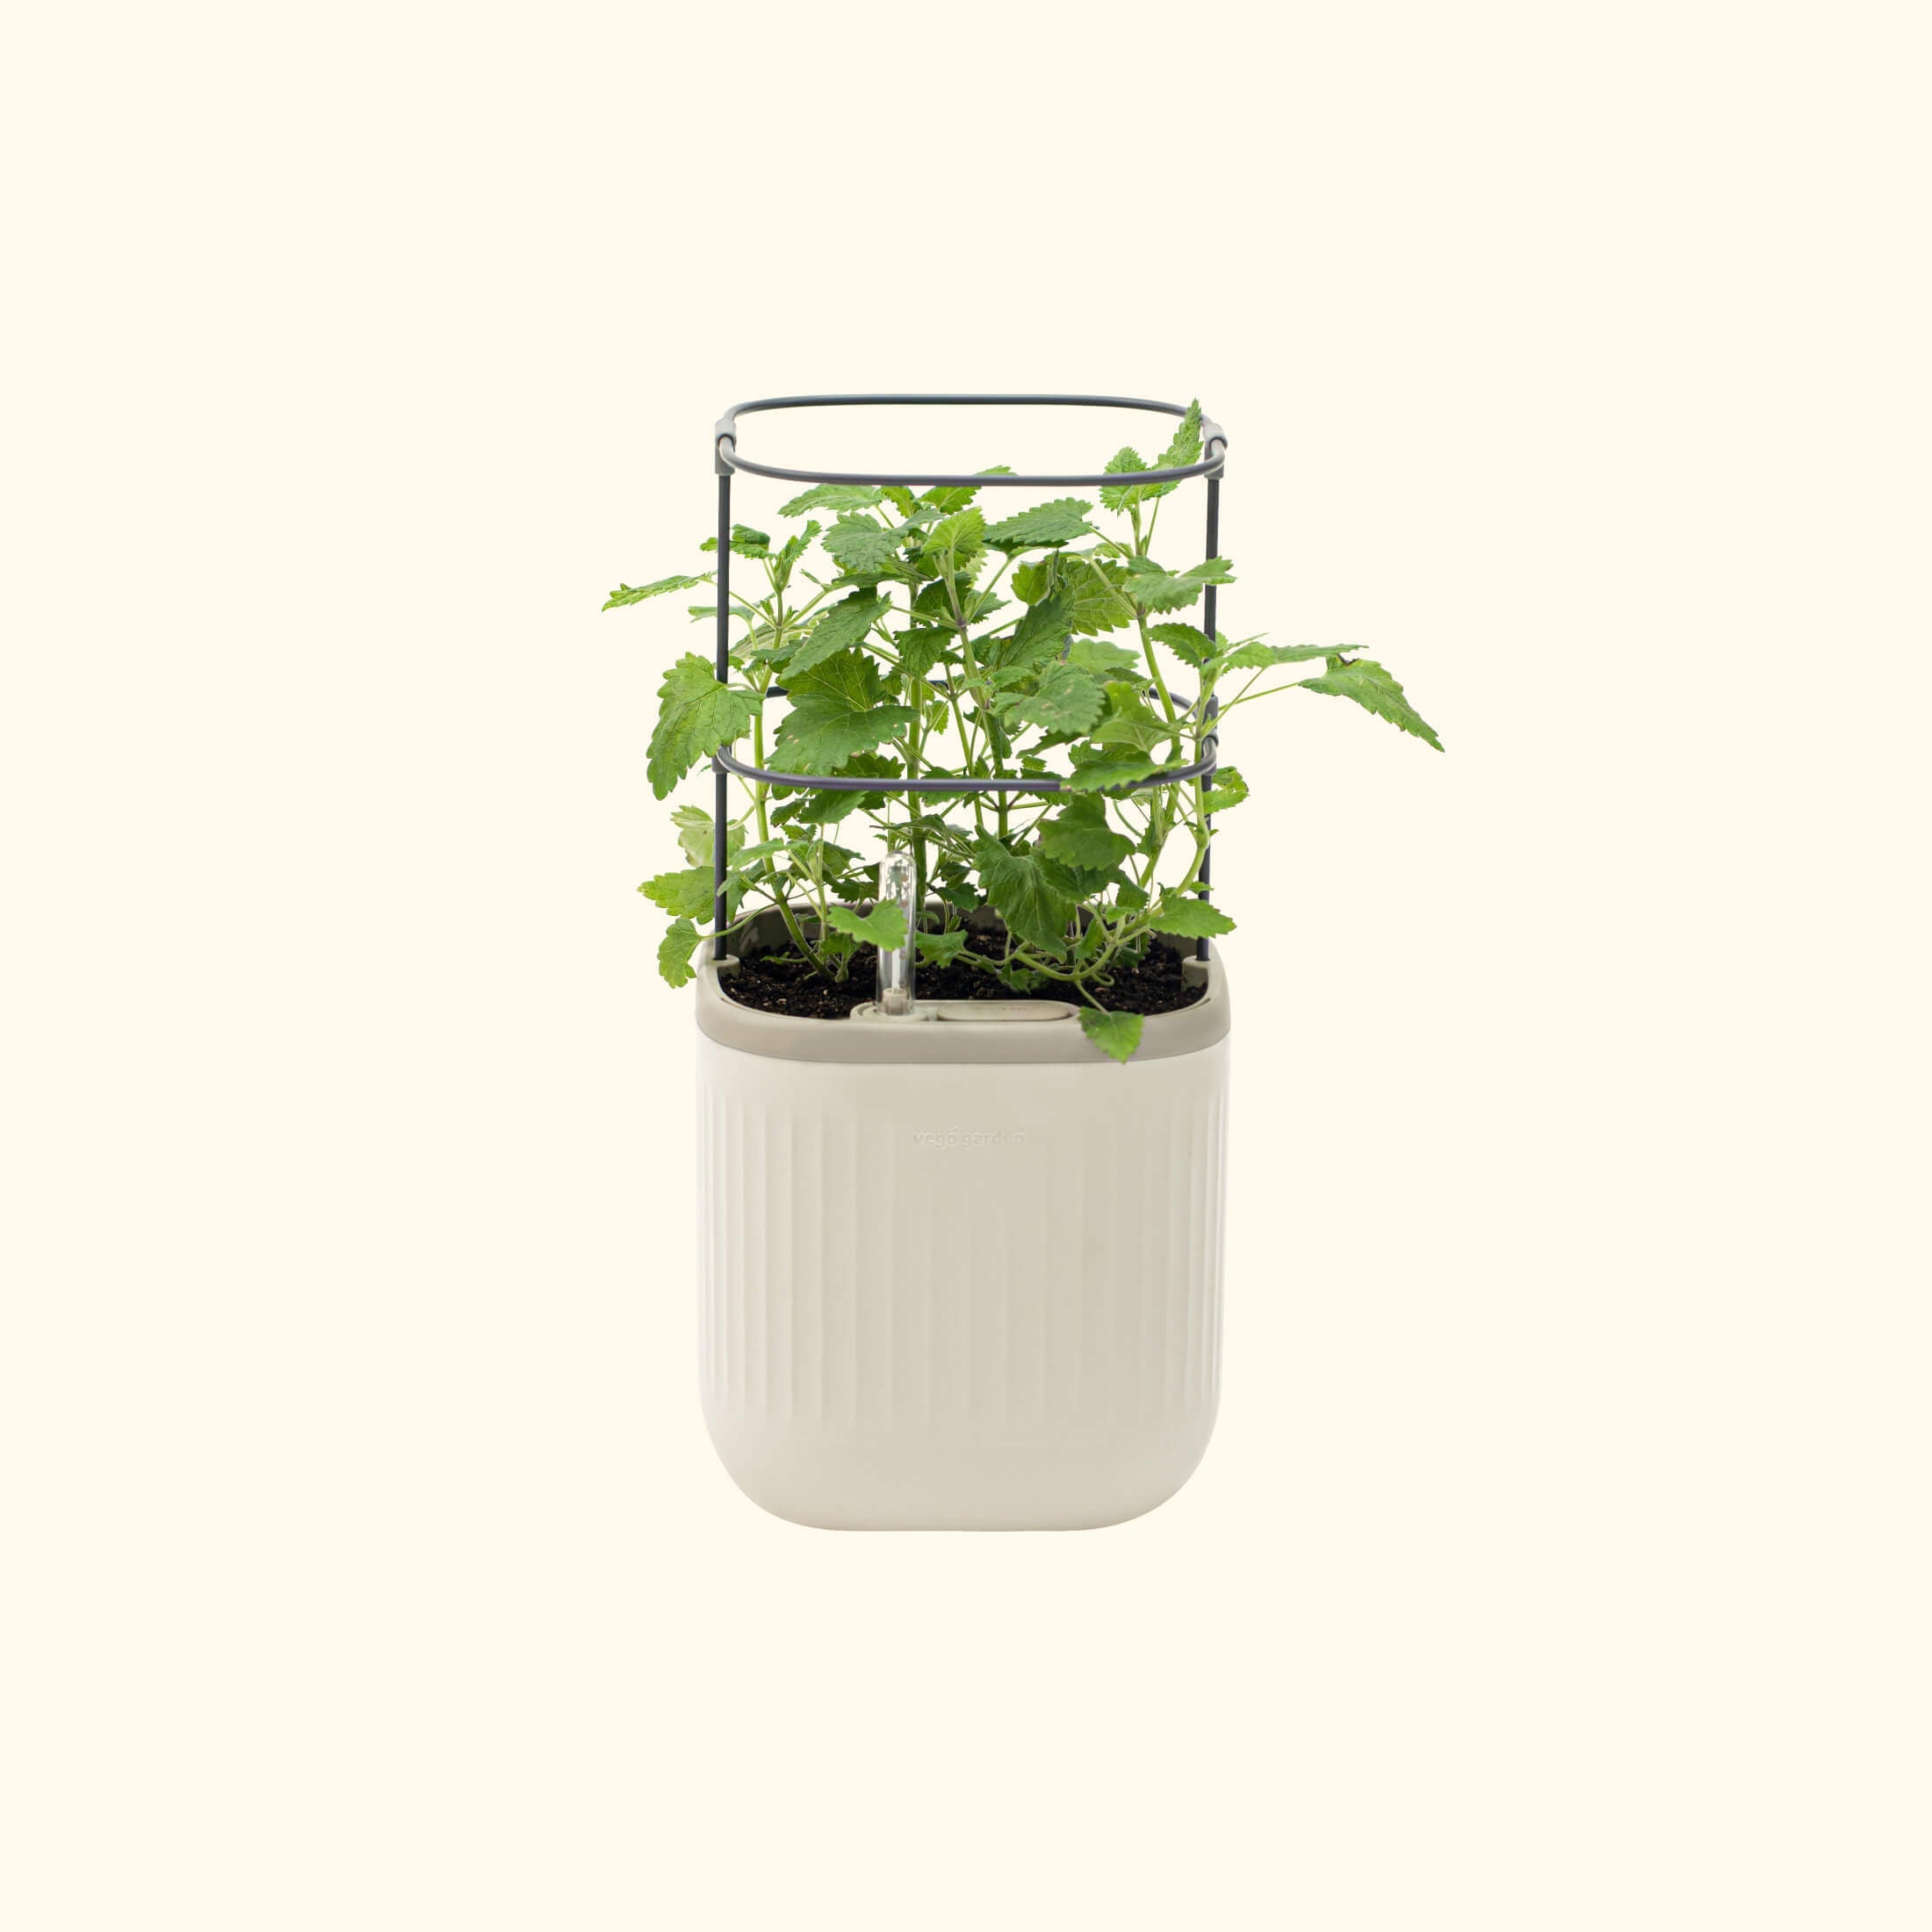 vego-garden-Self-Watering-Mini-Planter-Pot-with-Trellis